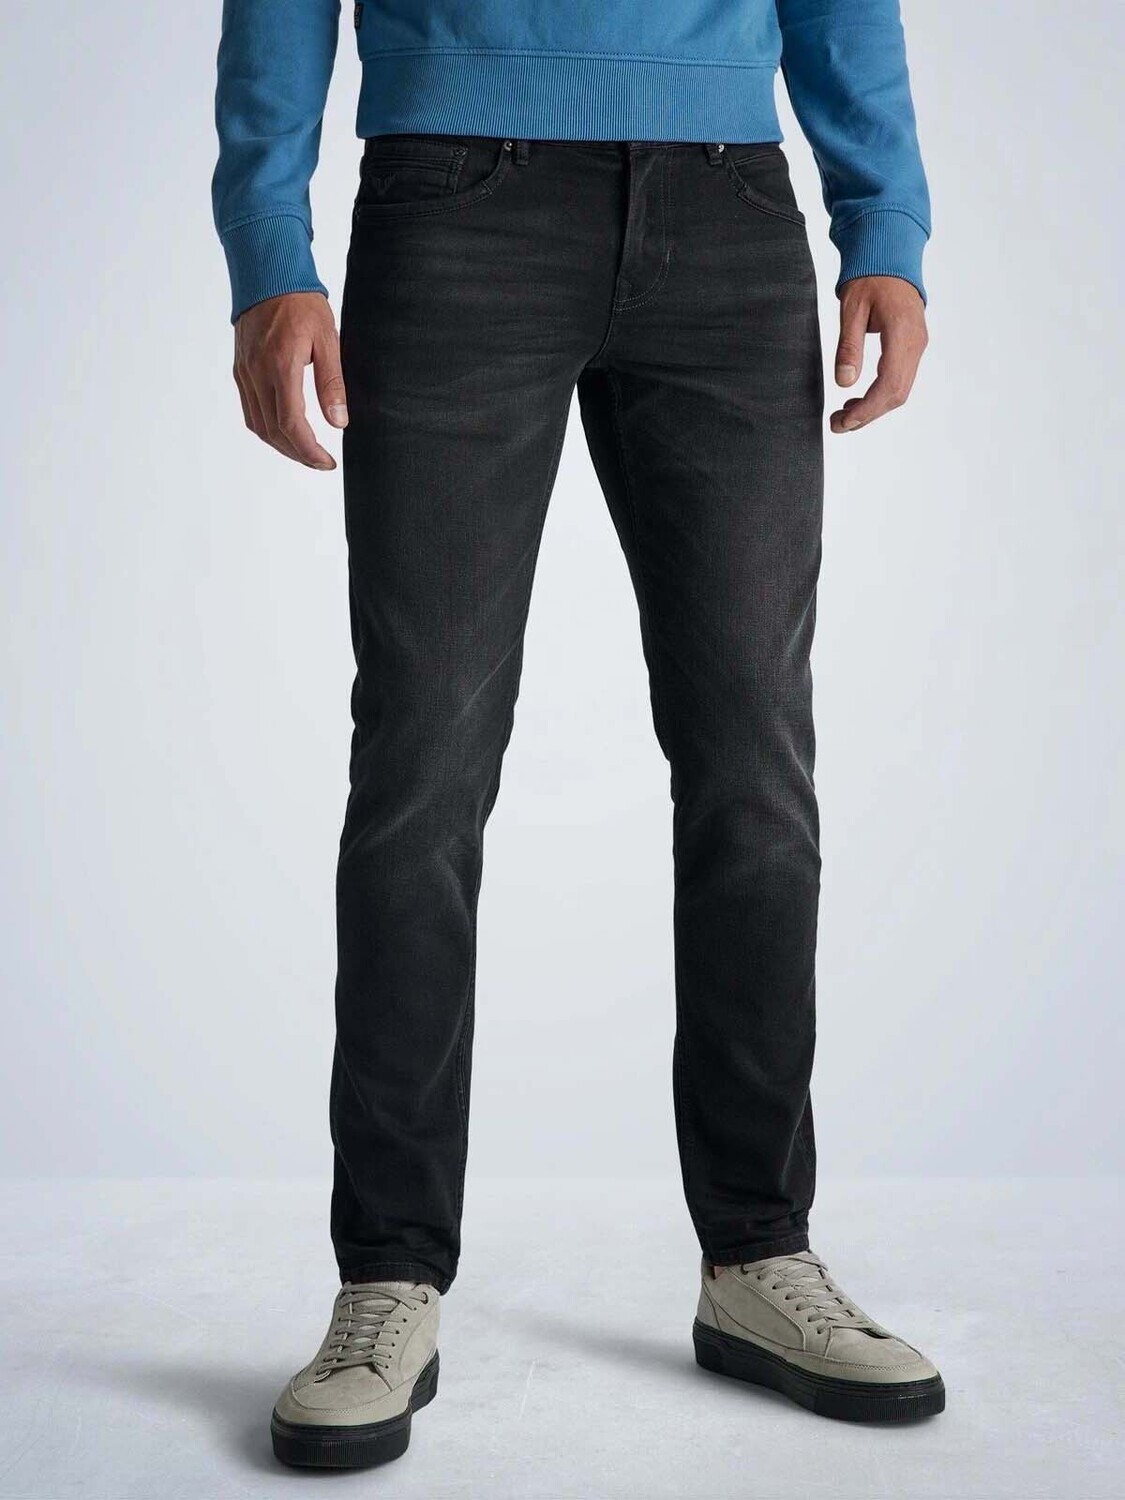 PME Legend | Tailwheel Soft Black Jeans